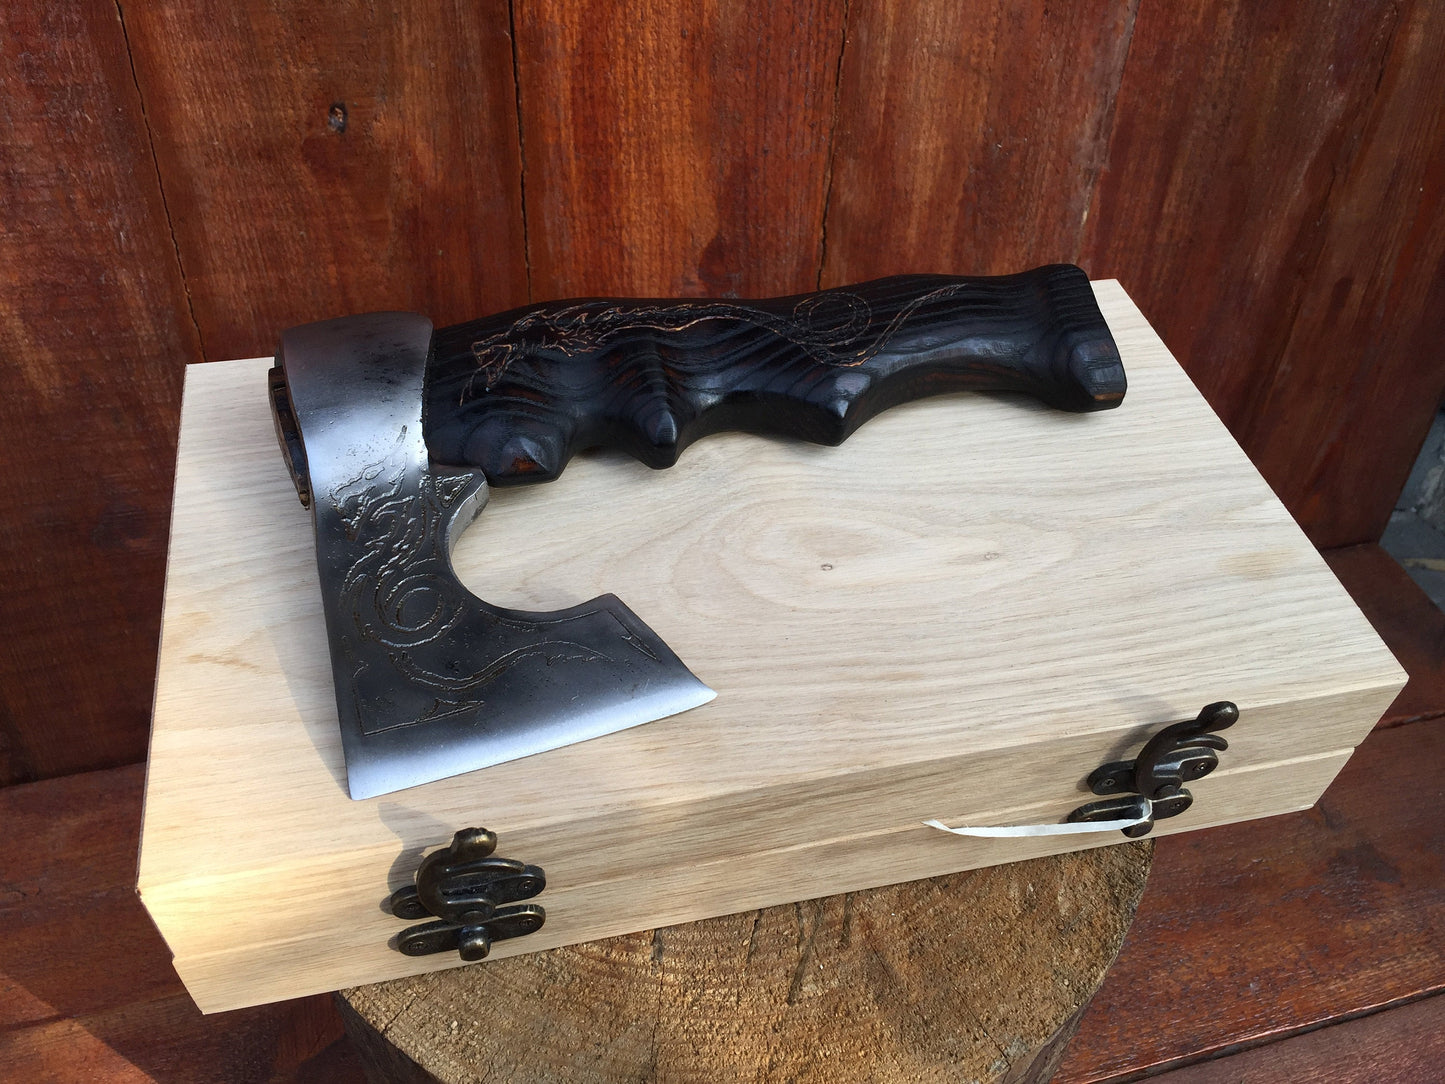 Axe in engraved wooden box, cool man gift, cool men gifts, husband gift, viking axe, boyfriend gift, tomahawk, iron anniversary, kitchen axe